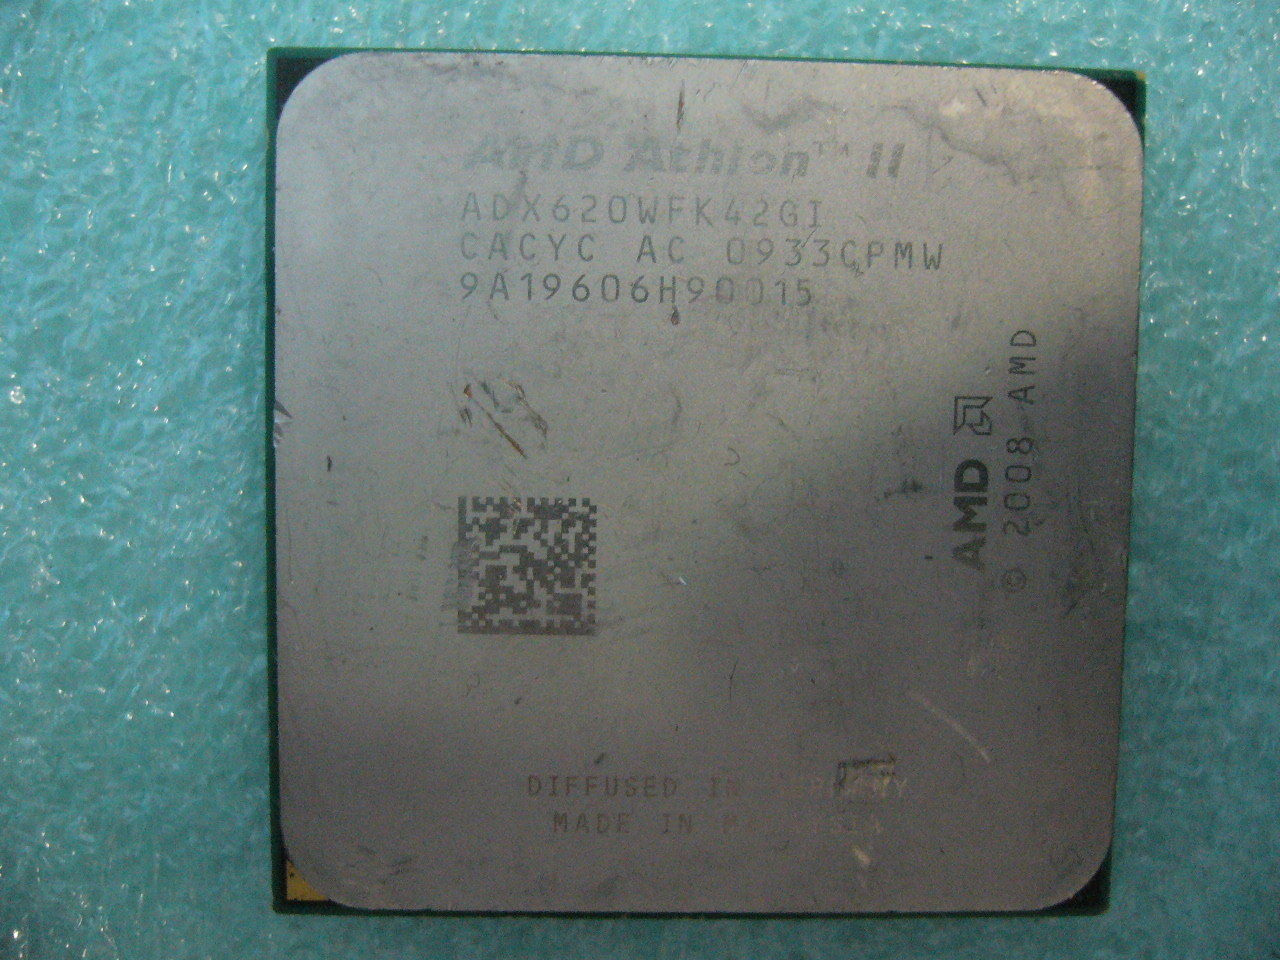 QTY 1x AMD Athlon II X4 620 2.6 GHz Quad-Core (ADX620WFK42GI CPU AM3 938-Pin